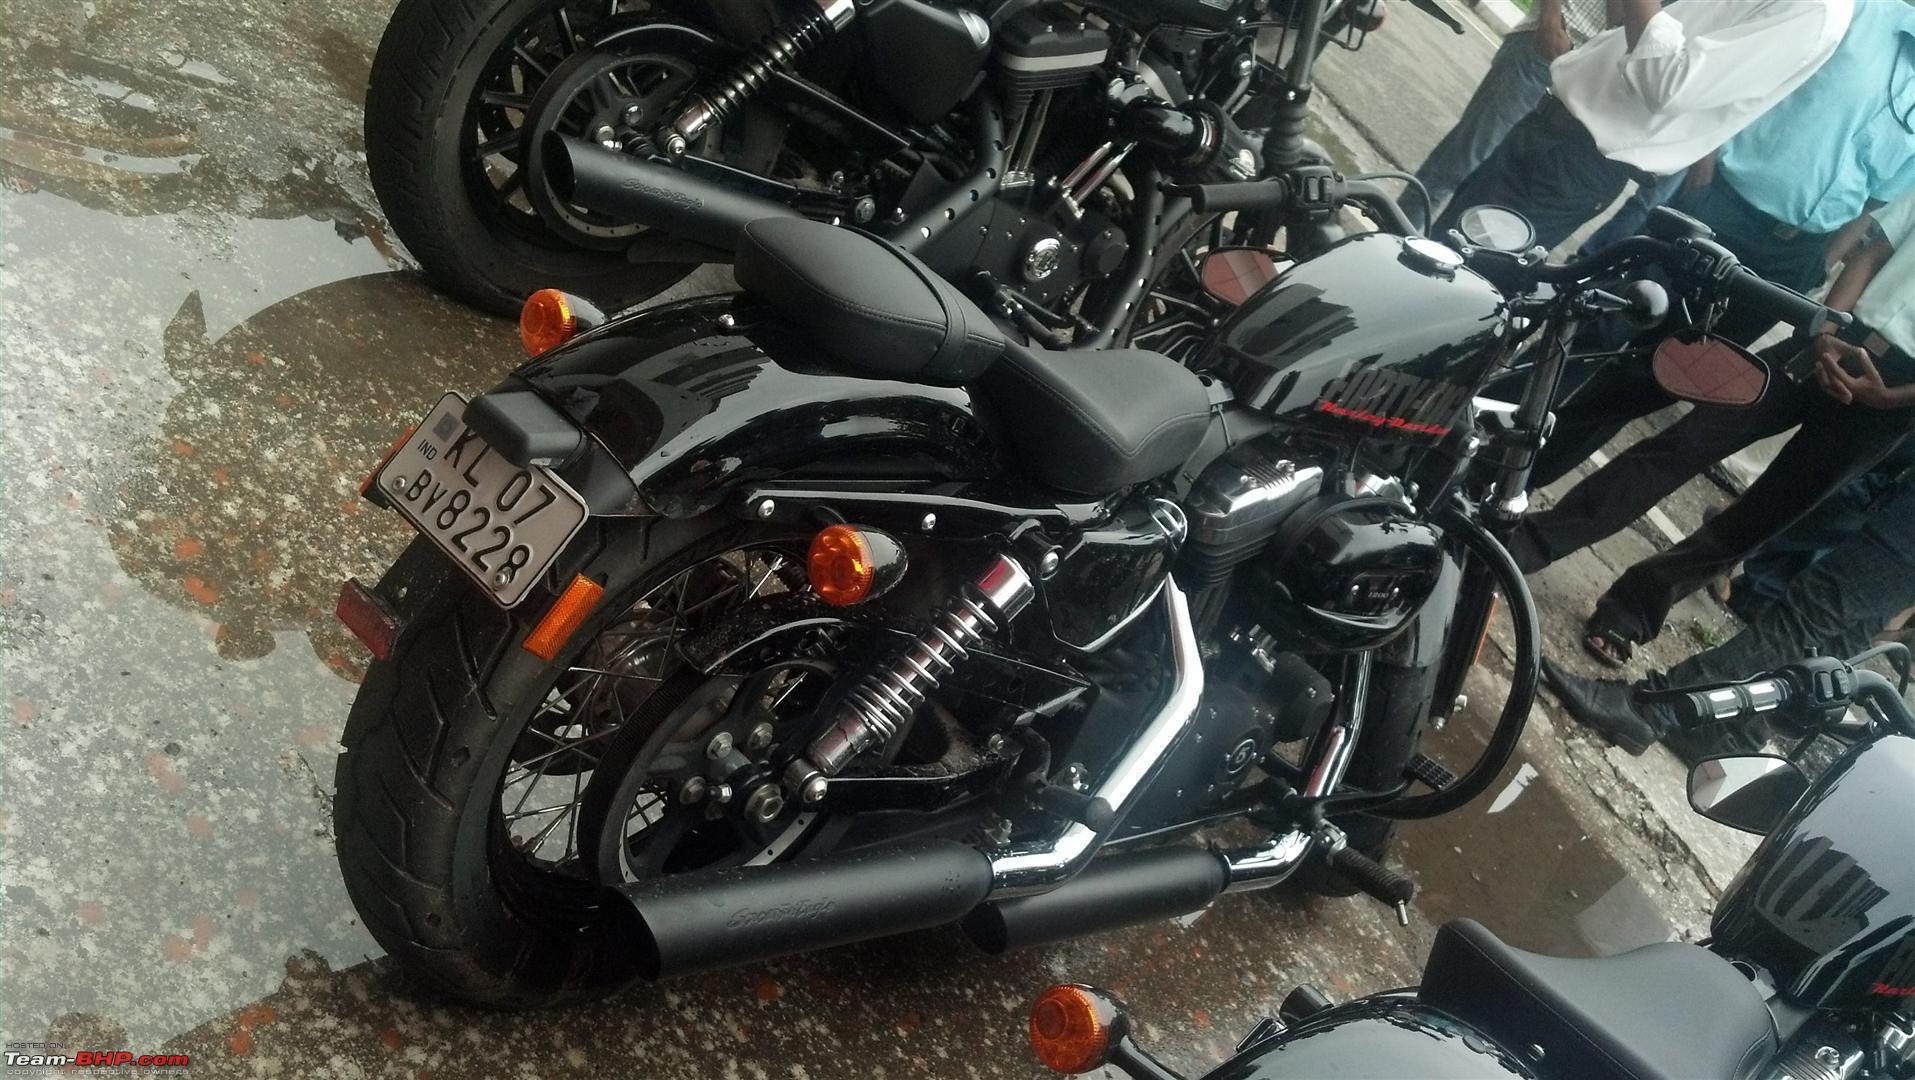 Harley Davidson Showroom Vyttila Kerala Team Bhp